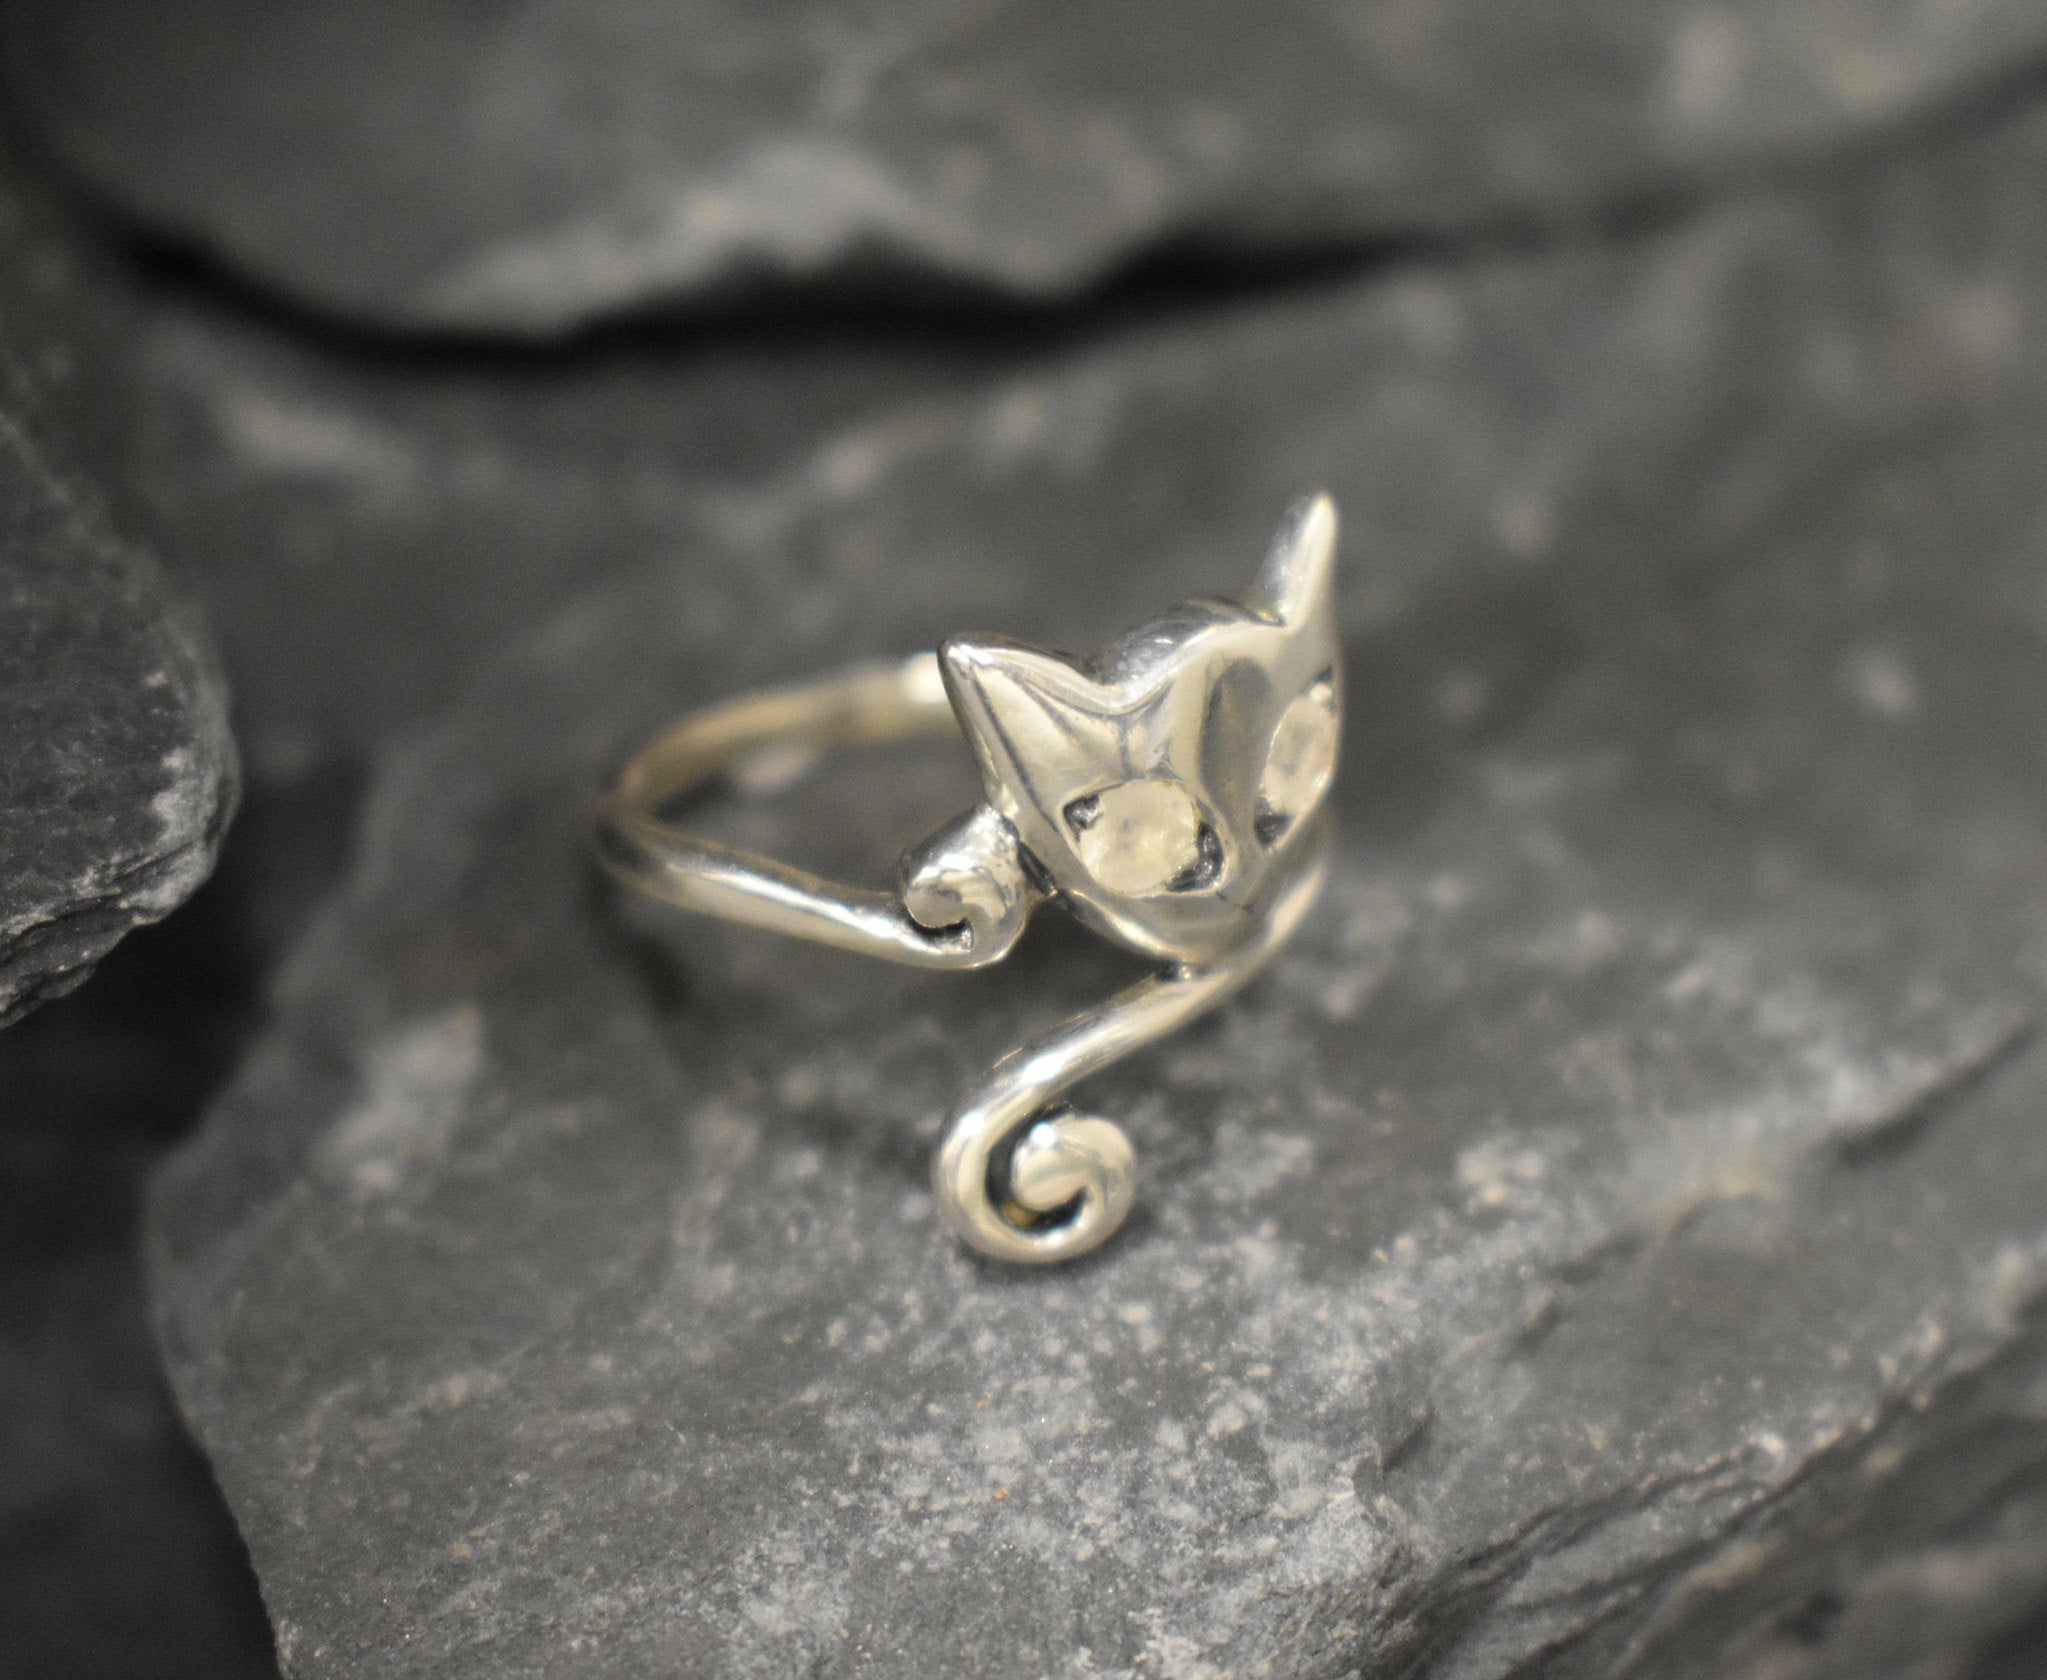 Silver Cat Ring, Natural Moonstone, Kitten Tail Ring, June Birthstone, Cute Cat Ring, Elegant Ring, Moonstone Cat Ring, Solid Silver Ring